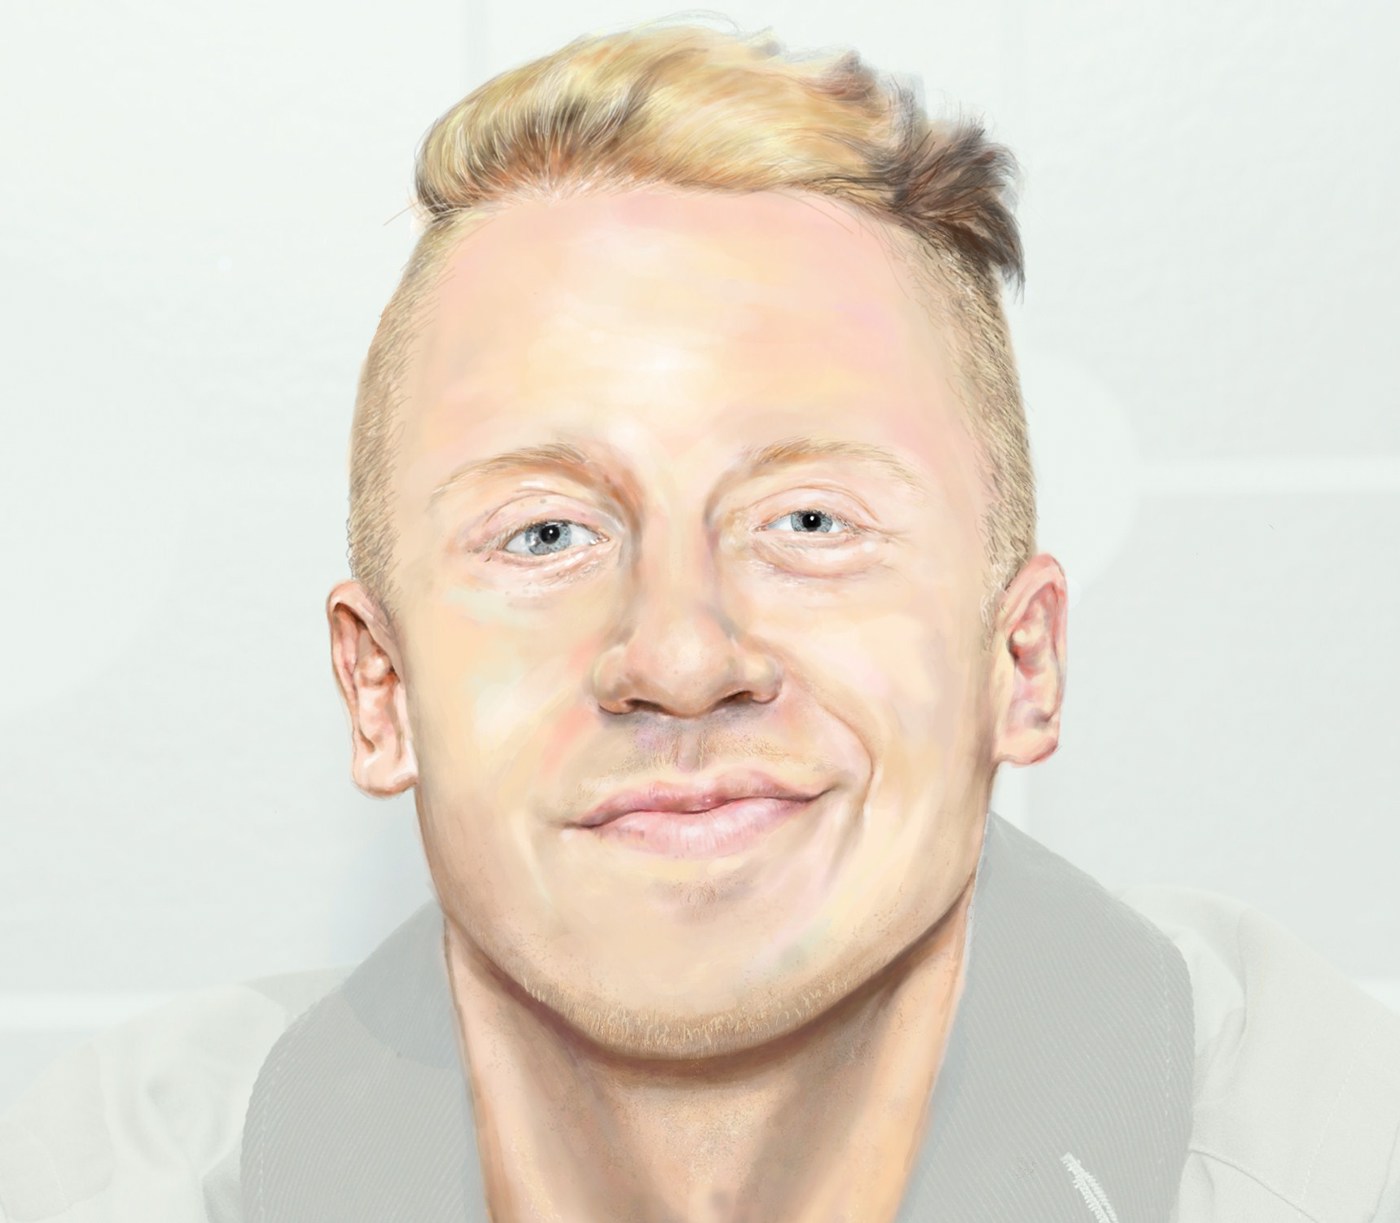 My first digital painting - Macklemore's portrait.